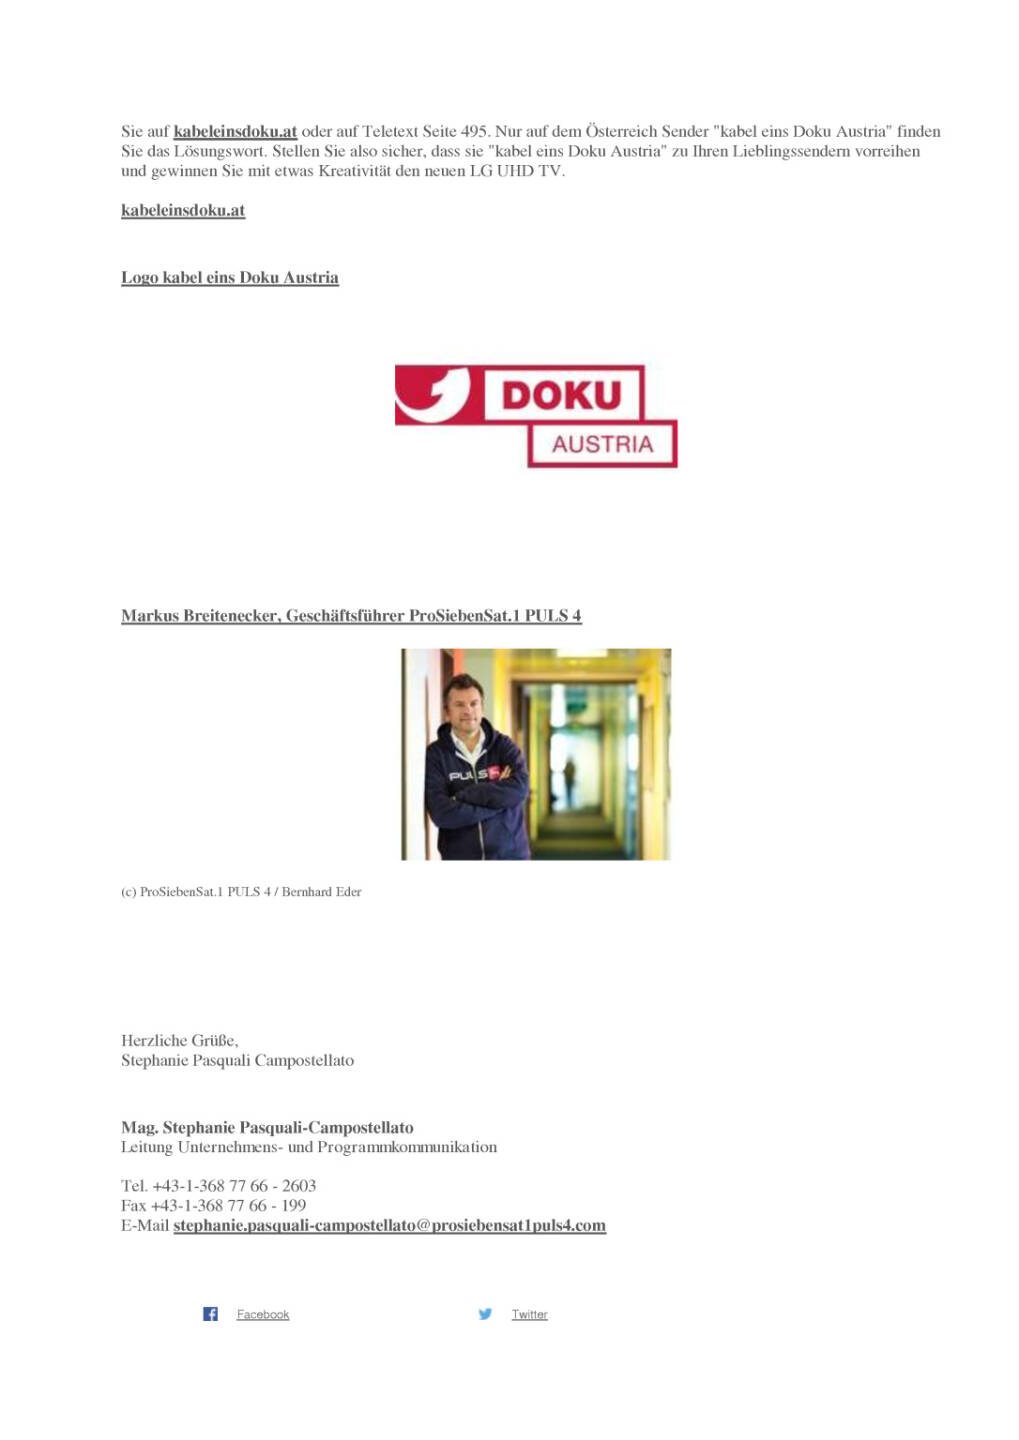 ProSiebenSat.1Puls4: Neuer Dokusender kabel eins Doku Austria, Seite 2/3, komplettes Dokument unter http://boerse-social.com/static/uploads/file_1793_prosiebensat1puls4_neuer_dokusender_kabel_eins_doku_austria.pdf